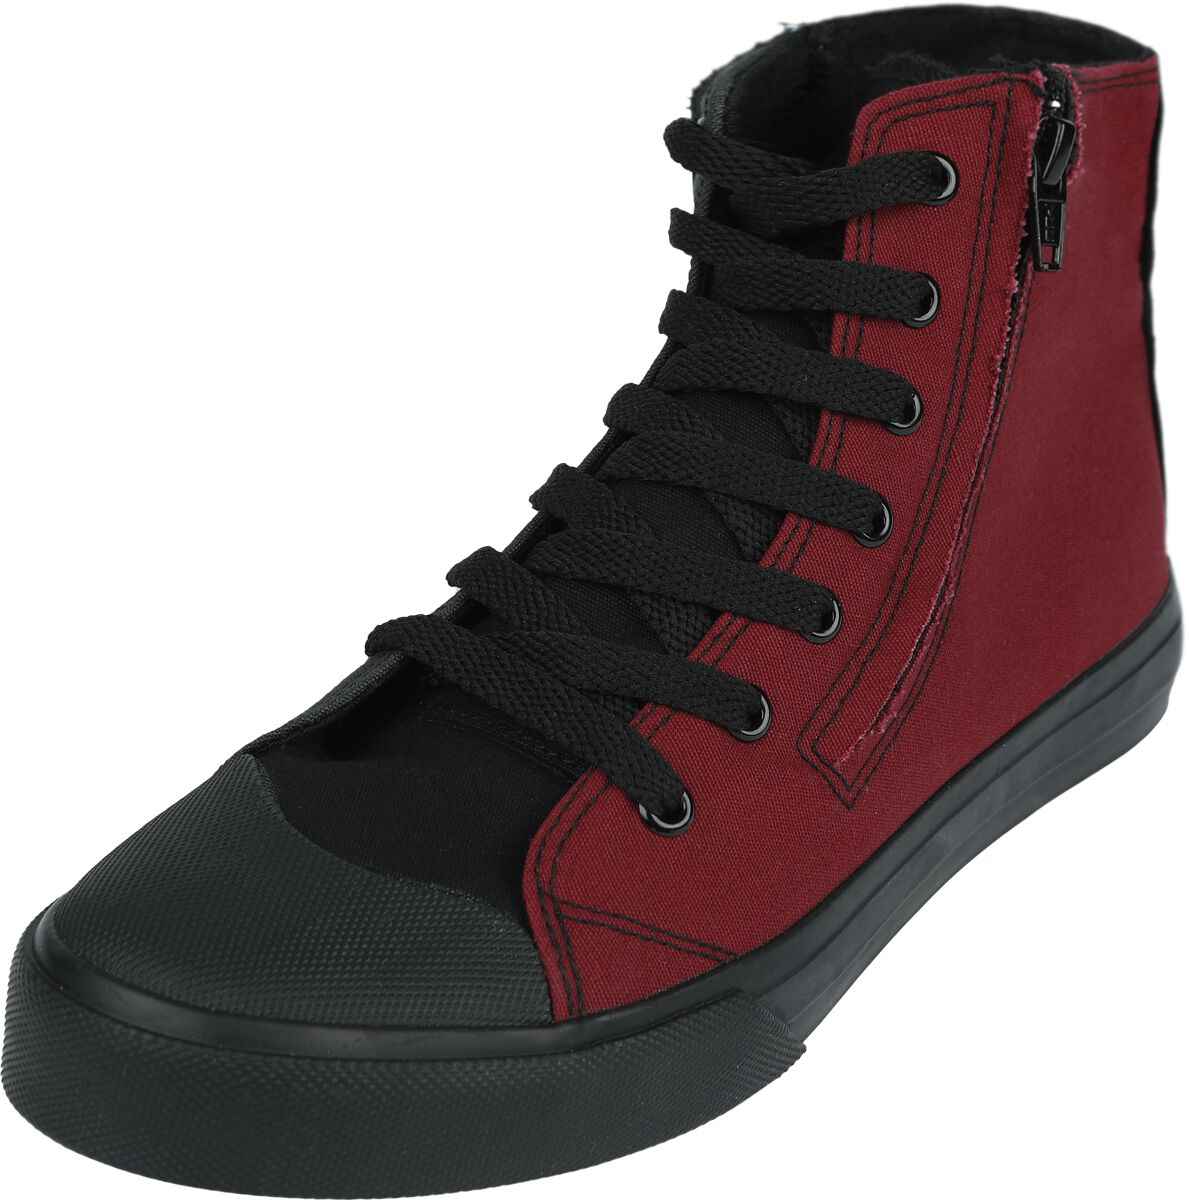 RED by EMP -  - Sneaker high - schwarz|grau|rot - EMP Exklusiv!